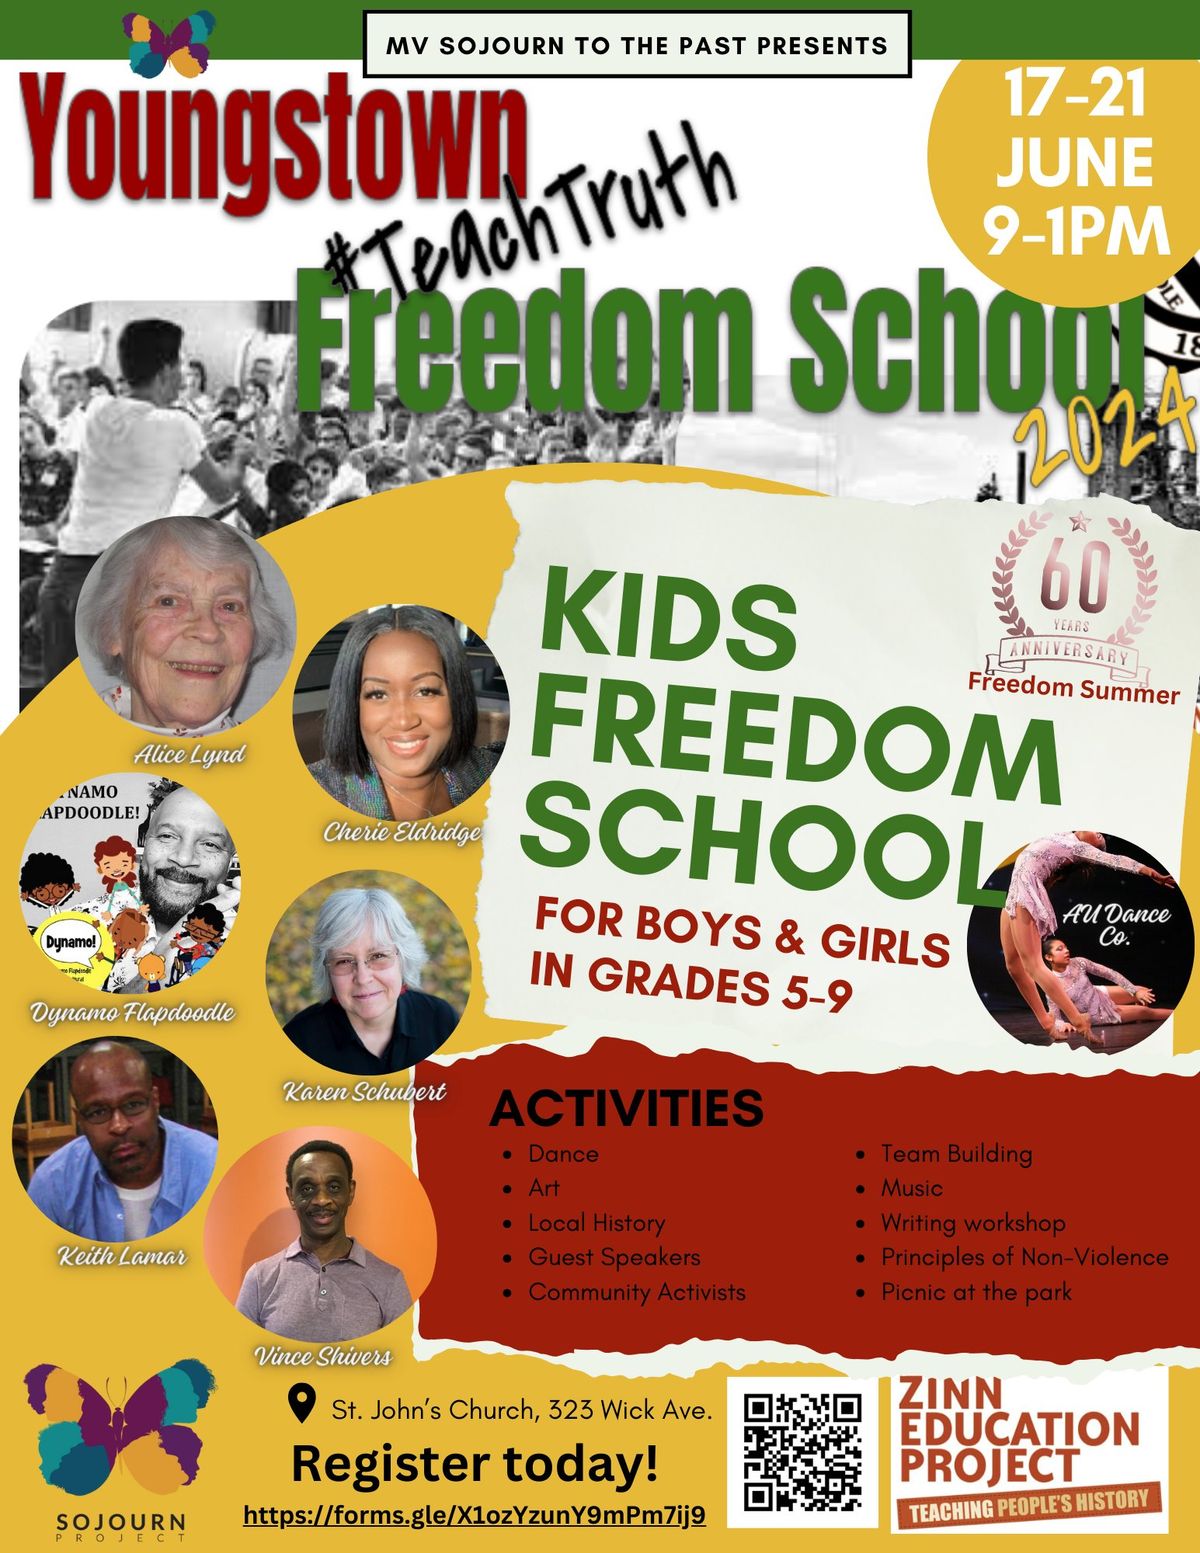 #TeachTruth Freedom School